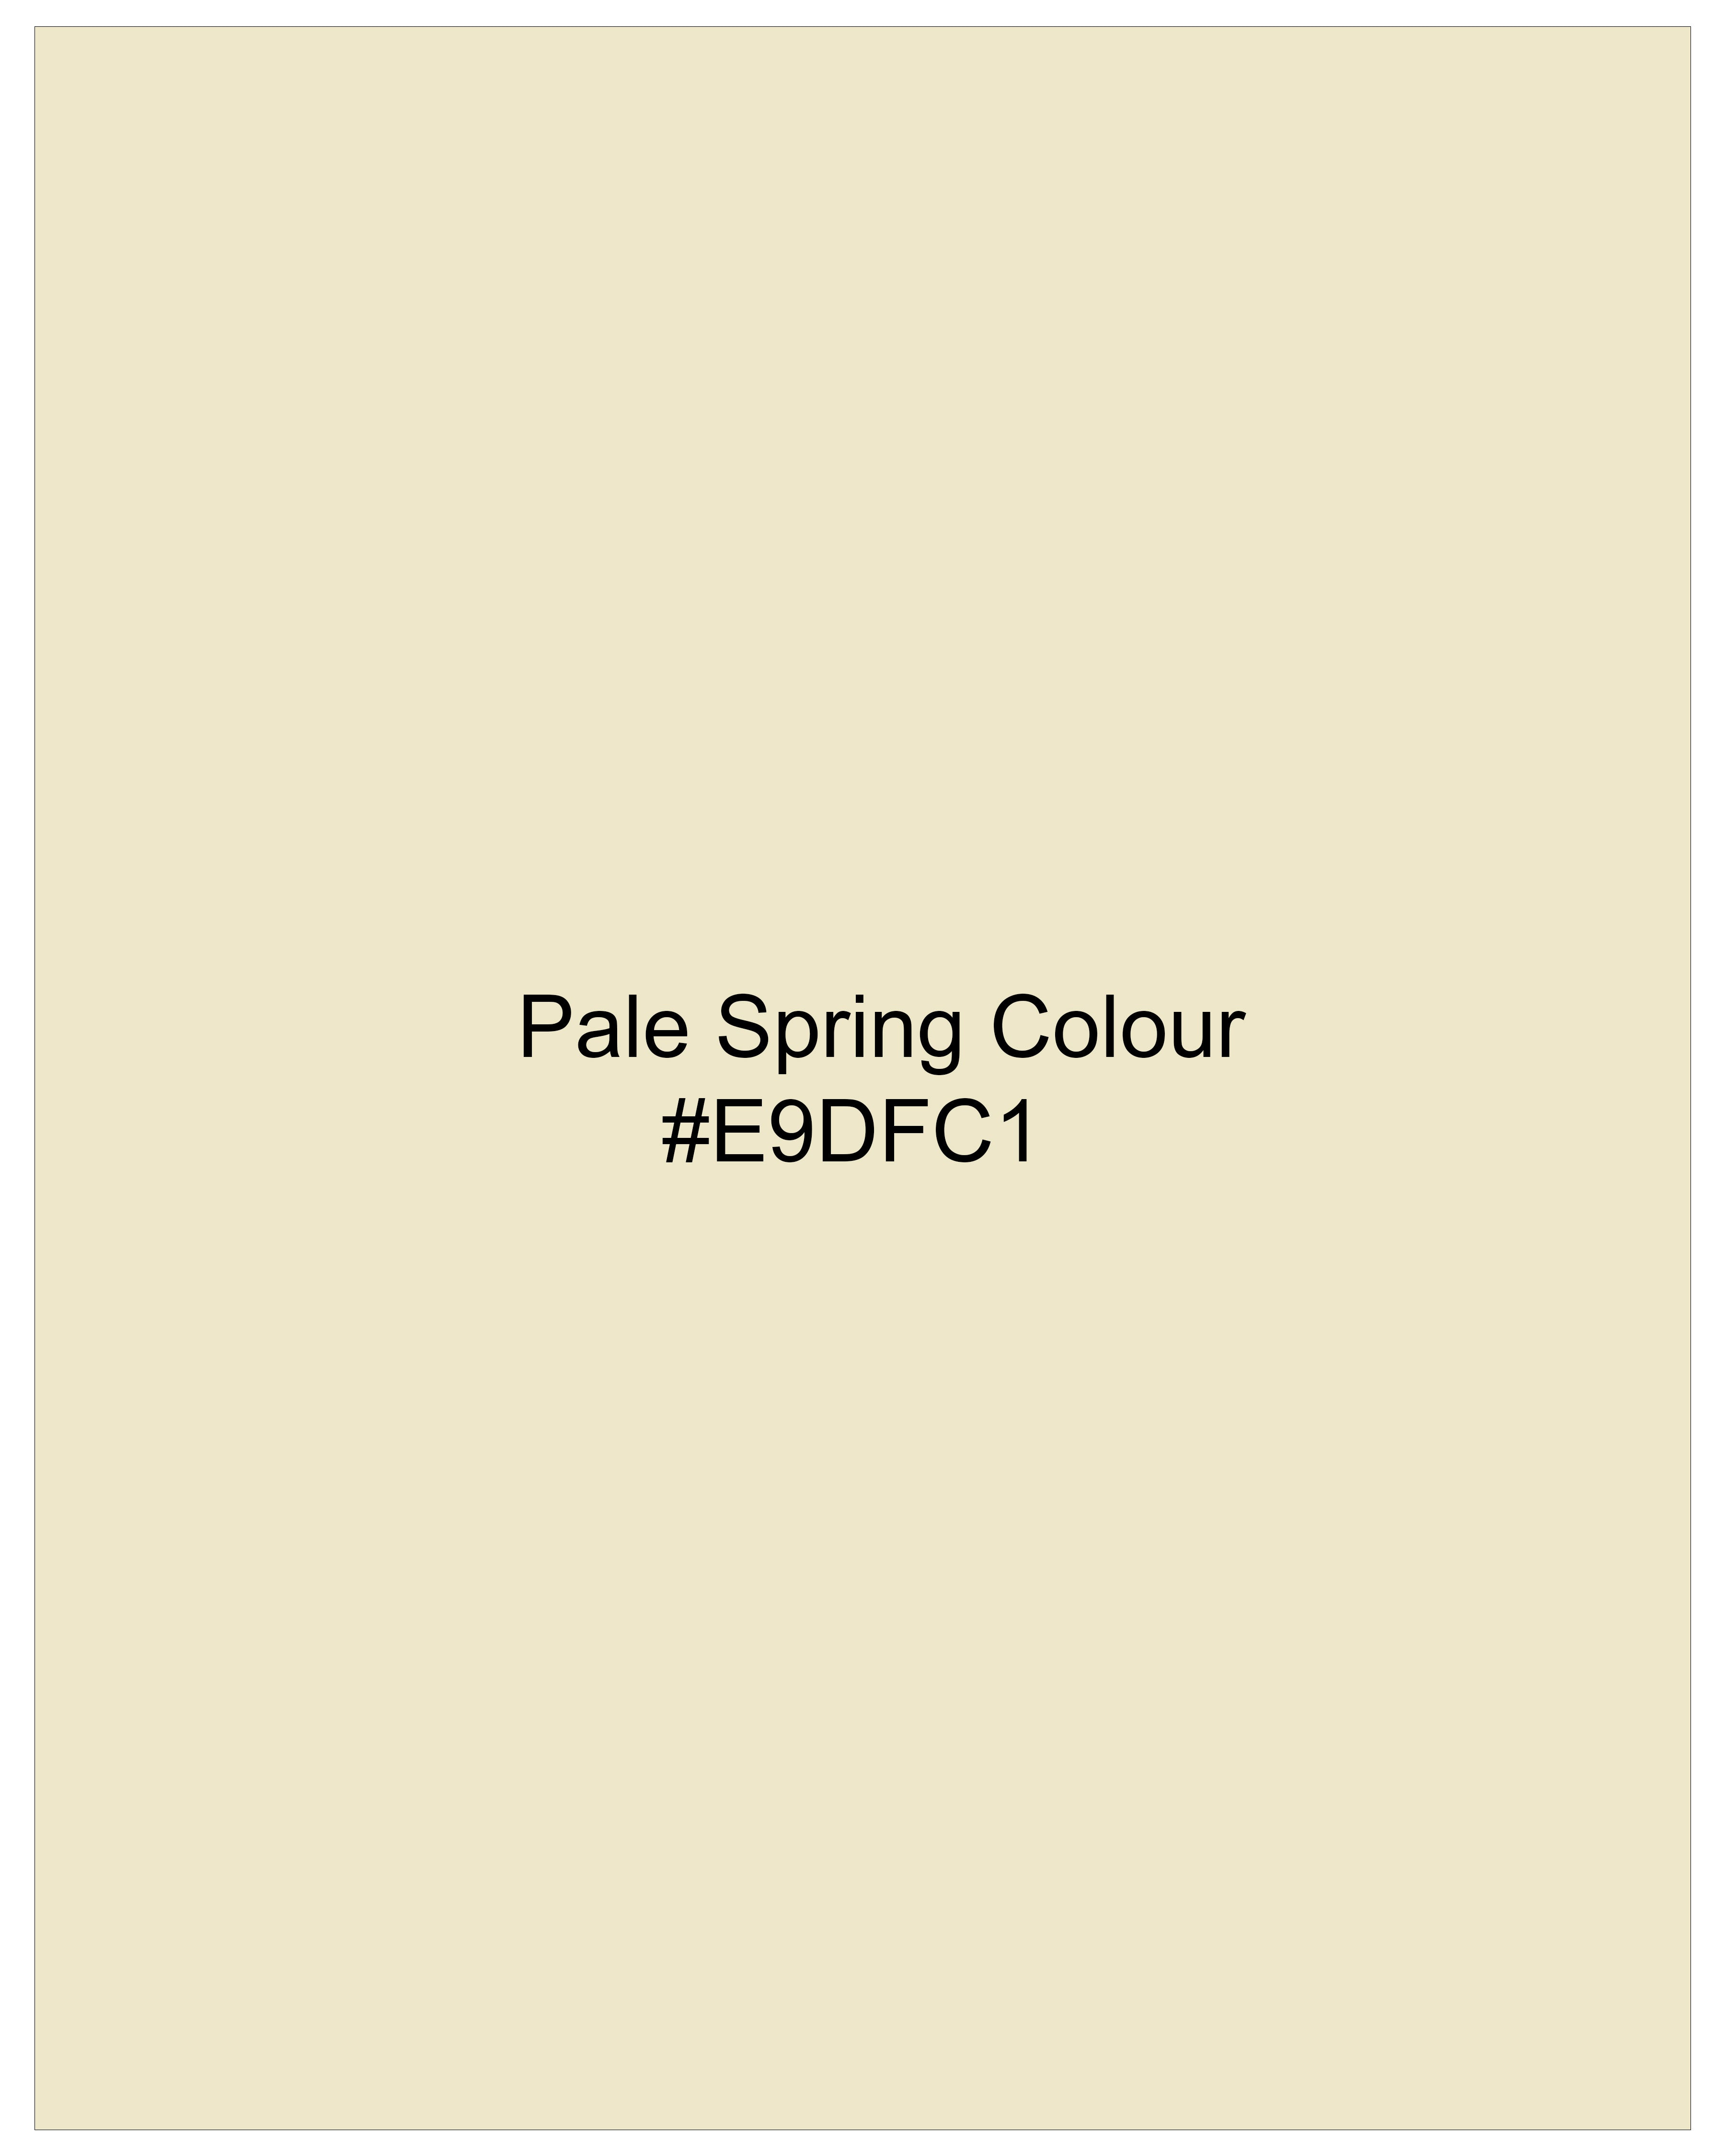 Pale Spring Cream Pant T2694-28, T2694-30, T2694-32, T2694-34, T2694-36, T2694-38, T2694-40, T2694-42, T2694-44